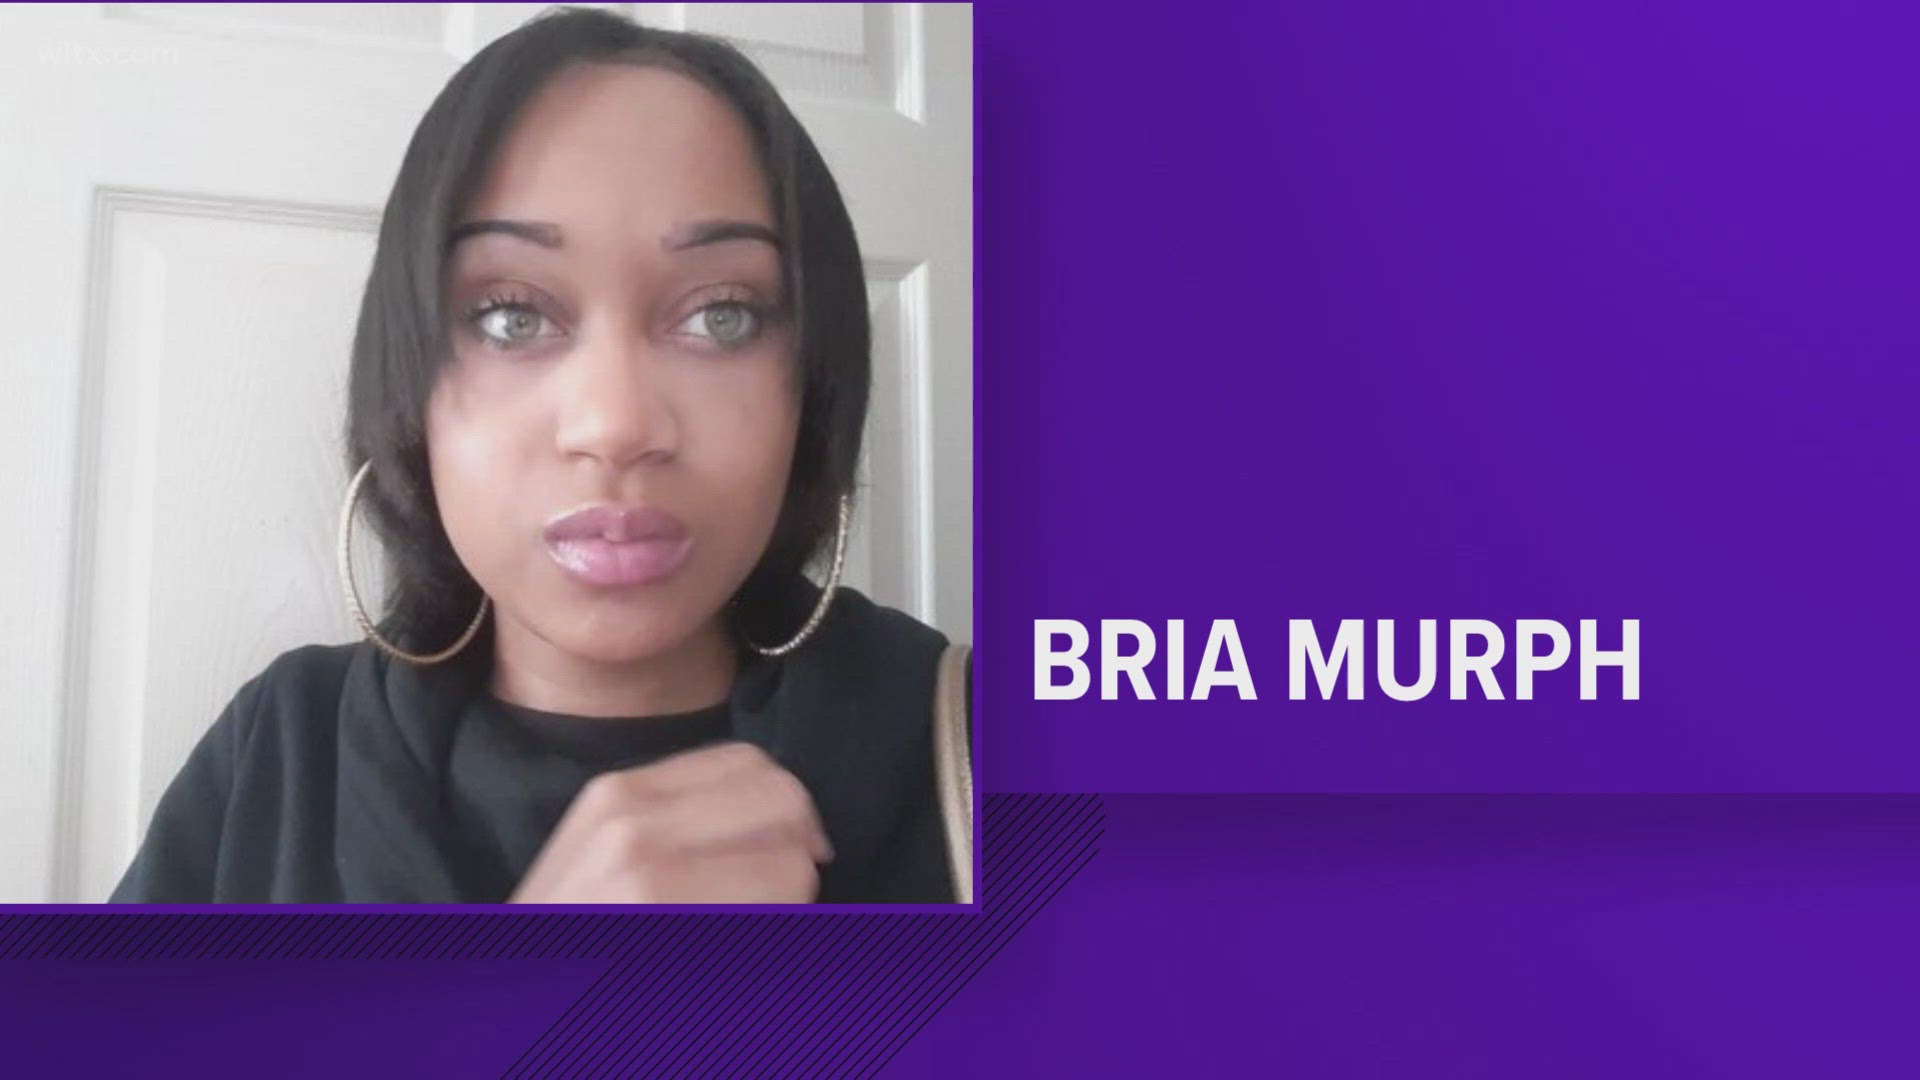 Bria Murph, 31 was last seen on Sunday in Orangeburg.